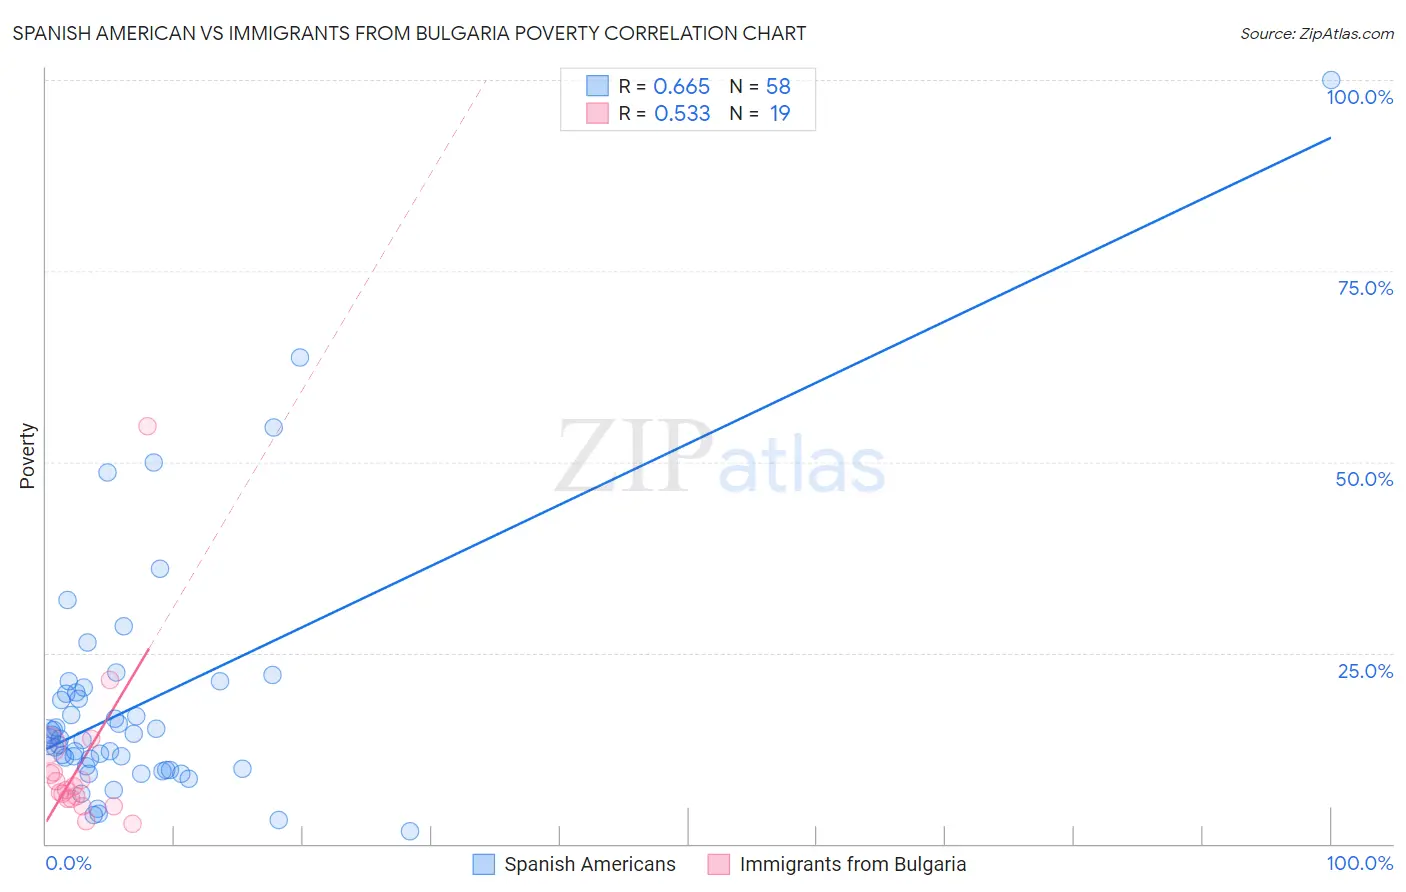 Spanish American vs Immigrants from Bulgaria Poverty